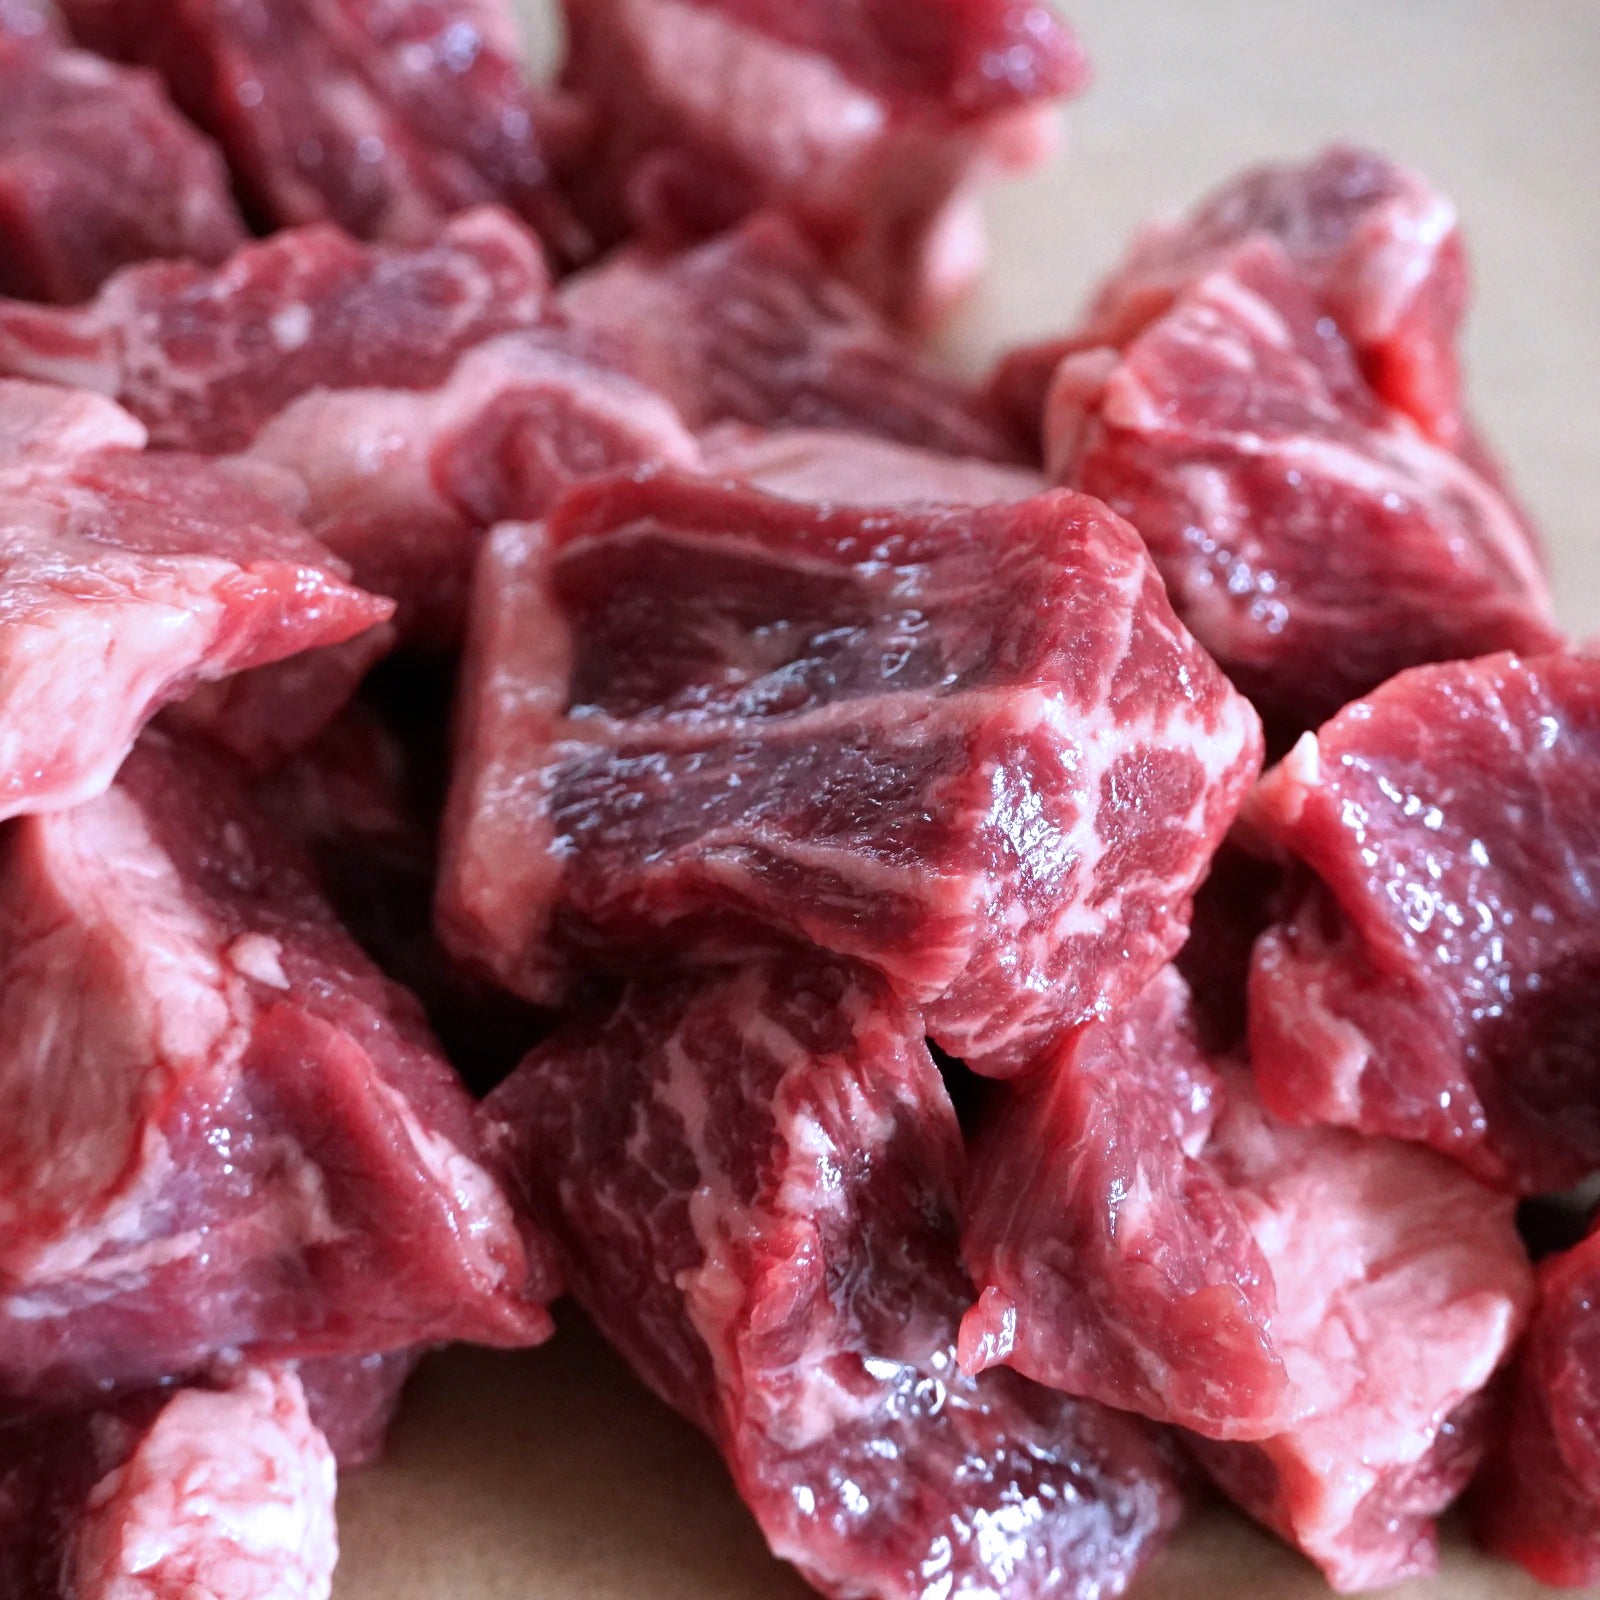 Grain-Fed Beef Stew Cuts New Zealand (450g) - Horizon Farms